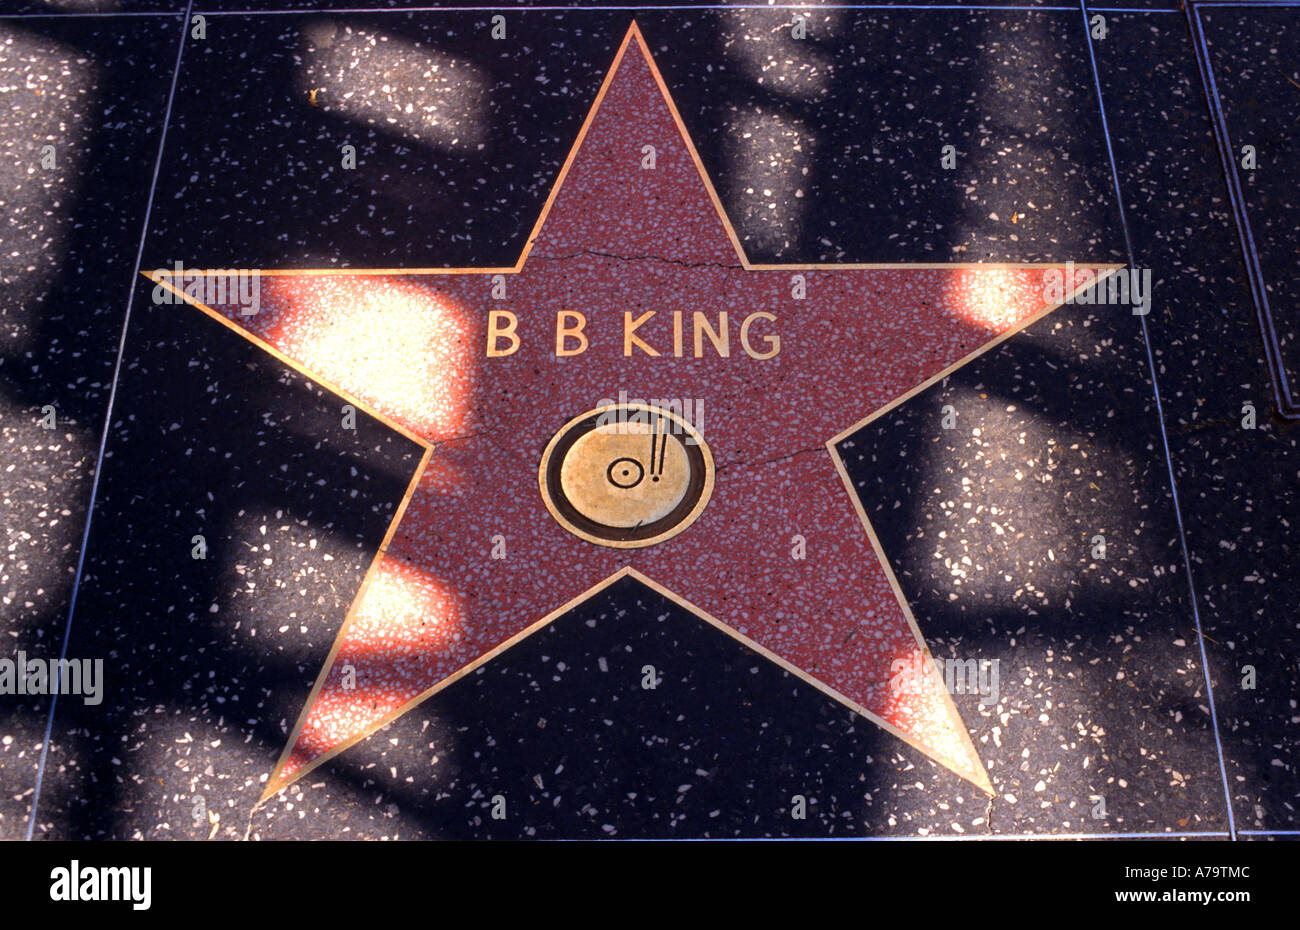 B B King Hollywood Boulevard Los Angeles Star ebnet Hollywood Boulevard Los Angeles Stockfoto